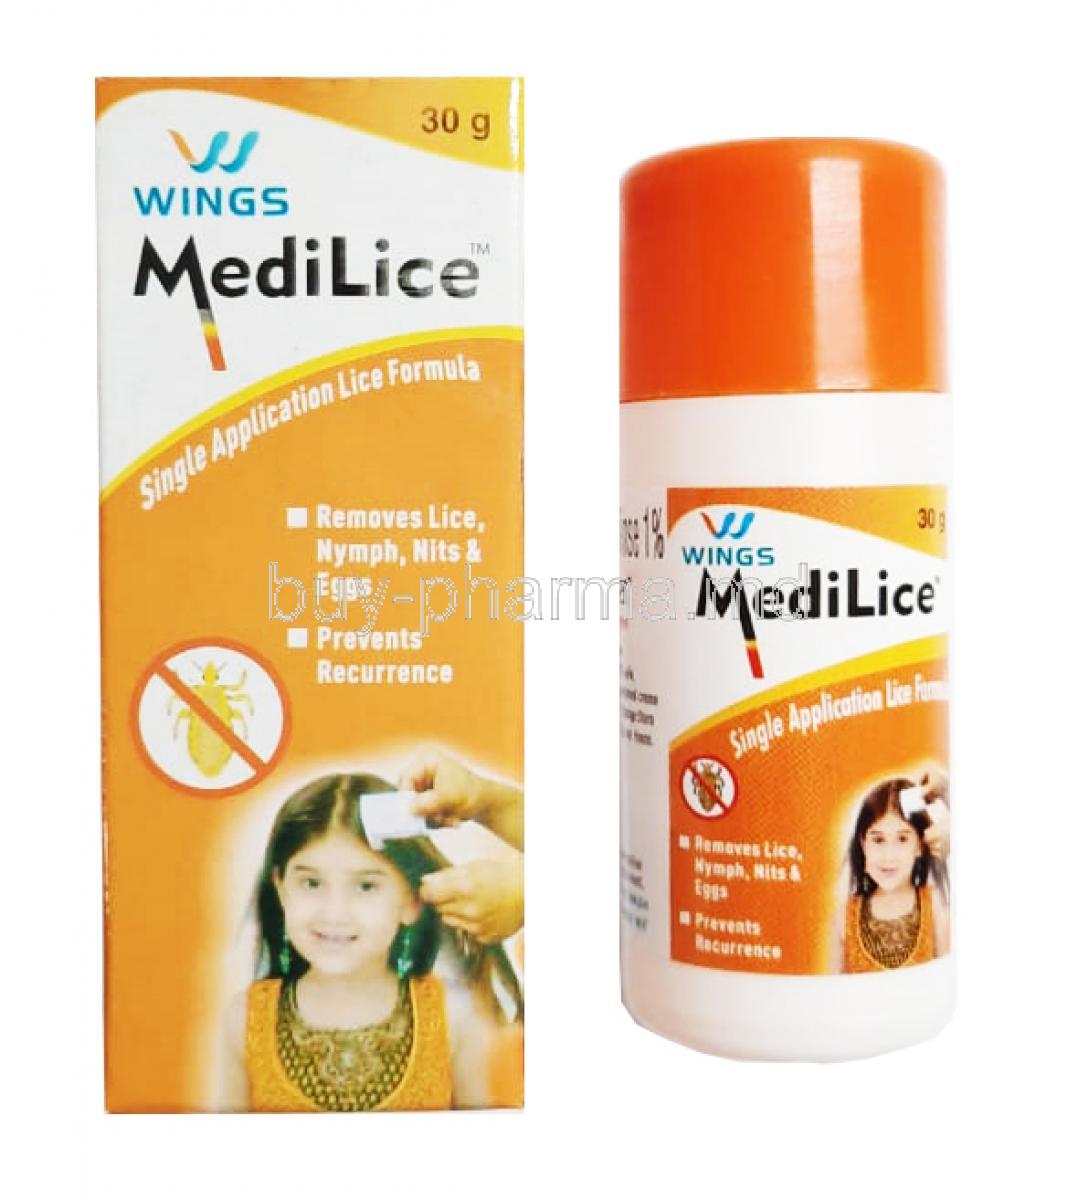 Medilice Anti Lice Cream Wash 30g box and bottle